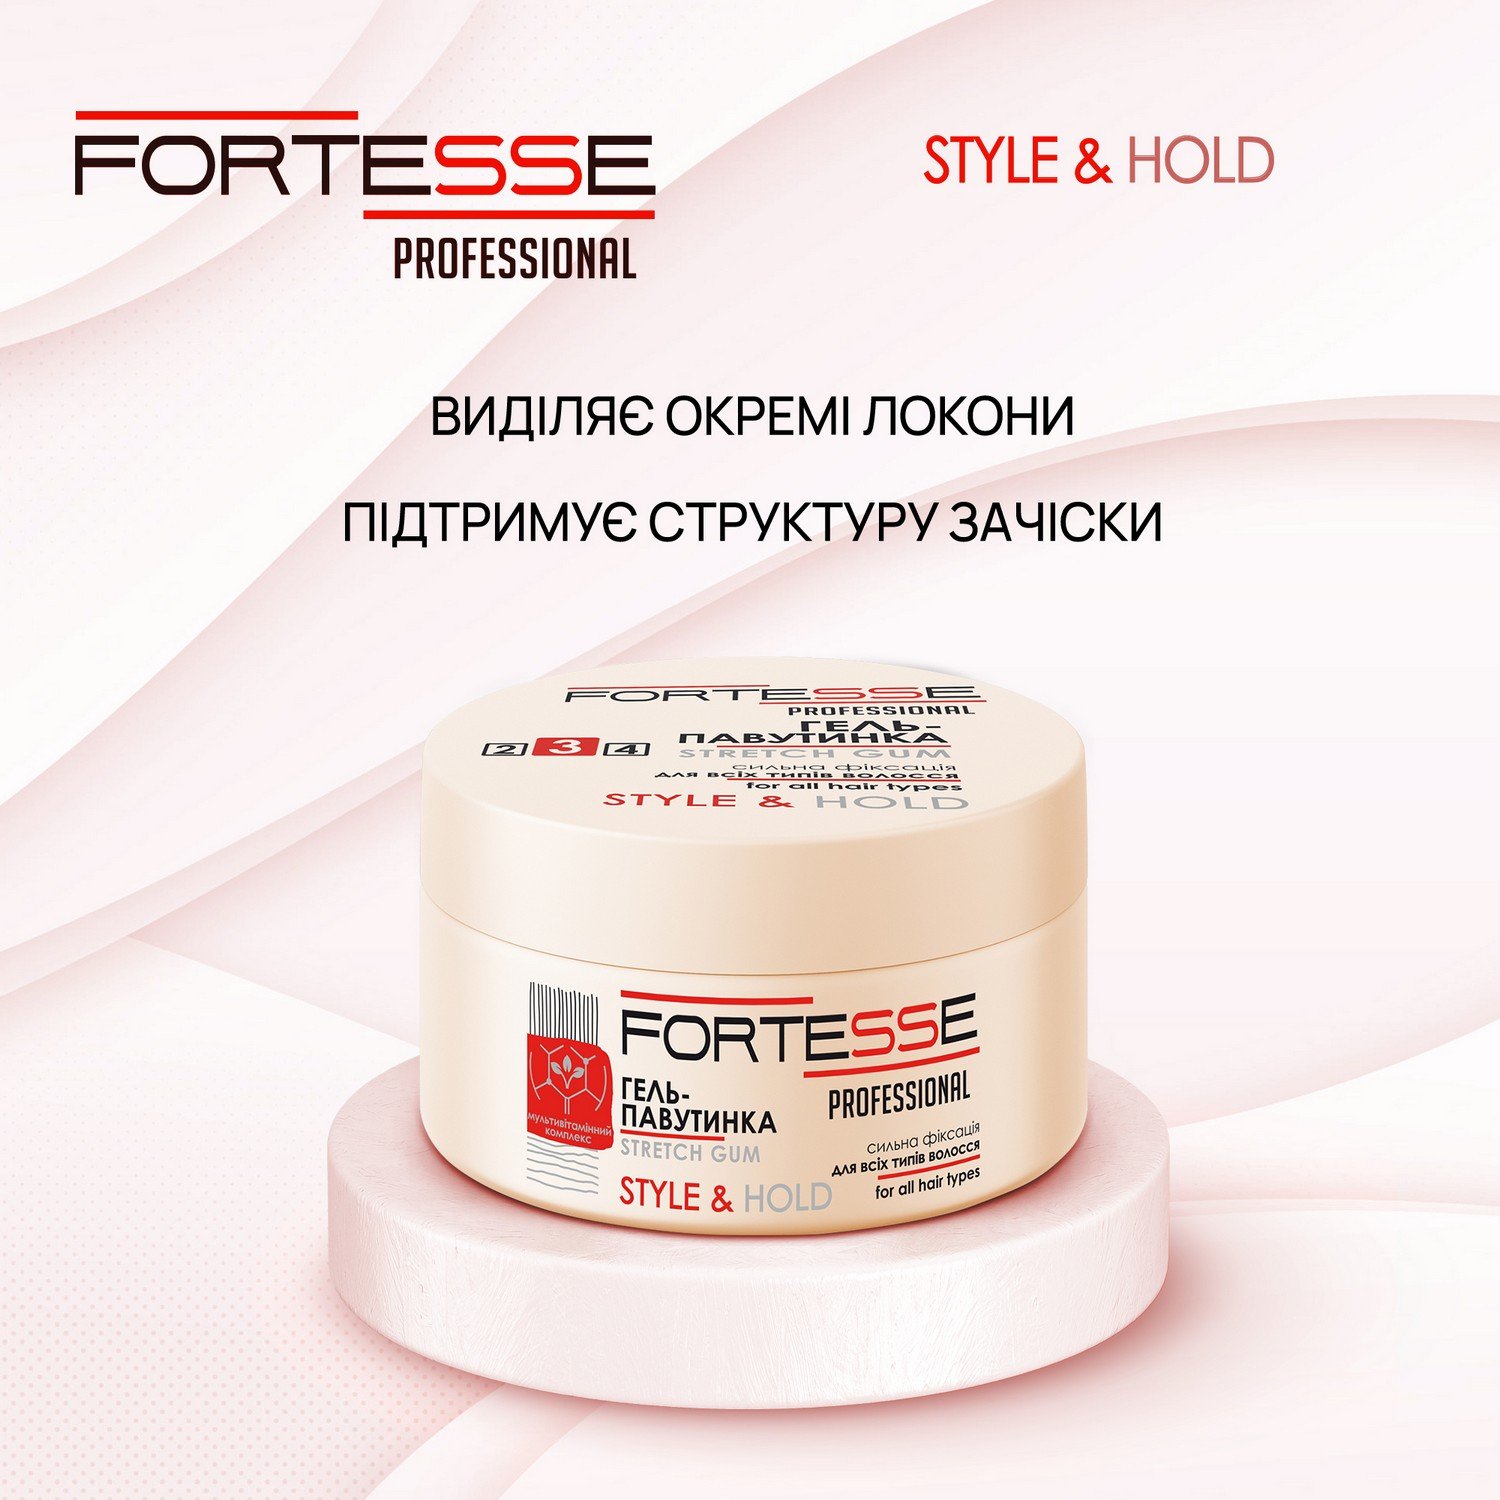 Гель-паутинка для волос Fortesse Professional Style&Hold сильная фиксация, 75 мл - фото 4